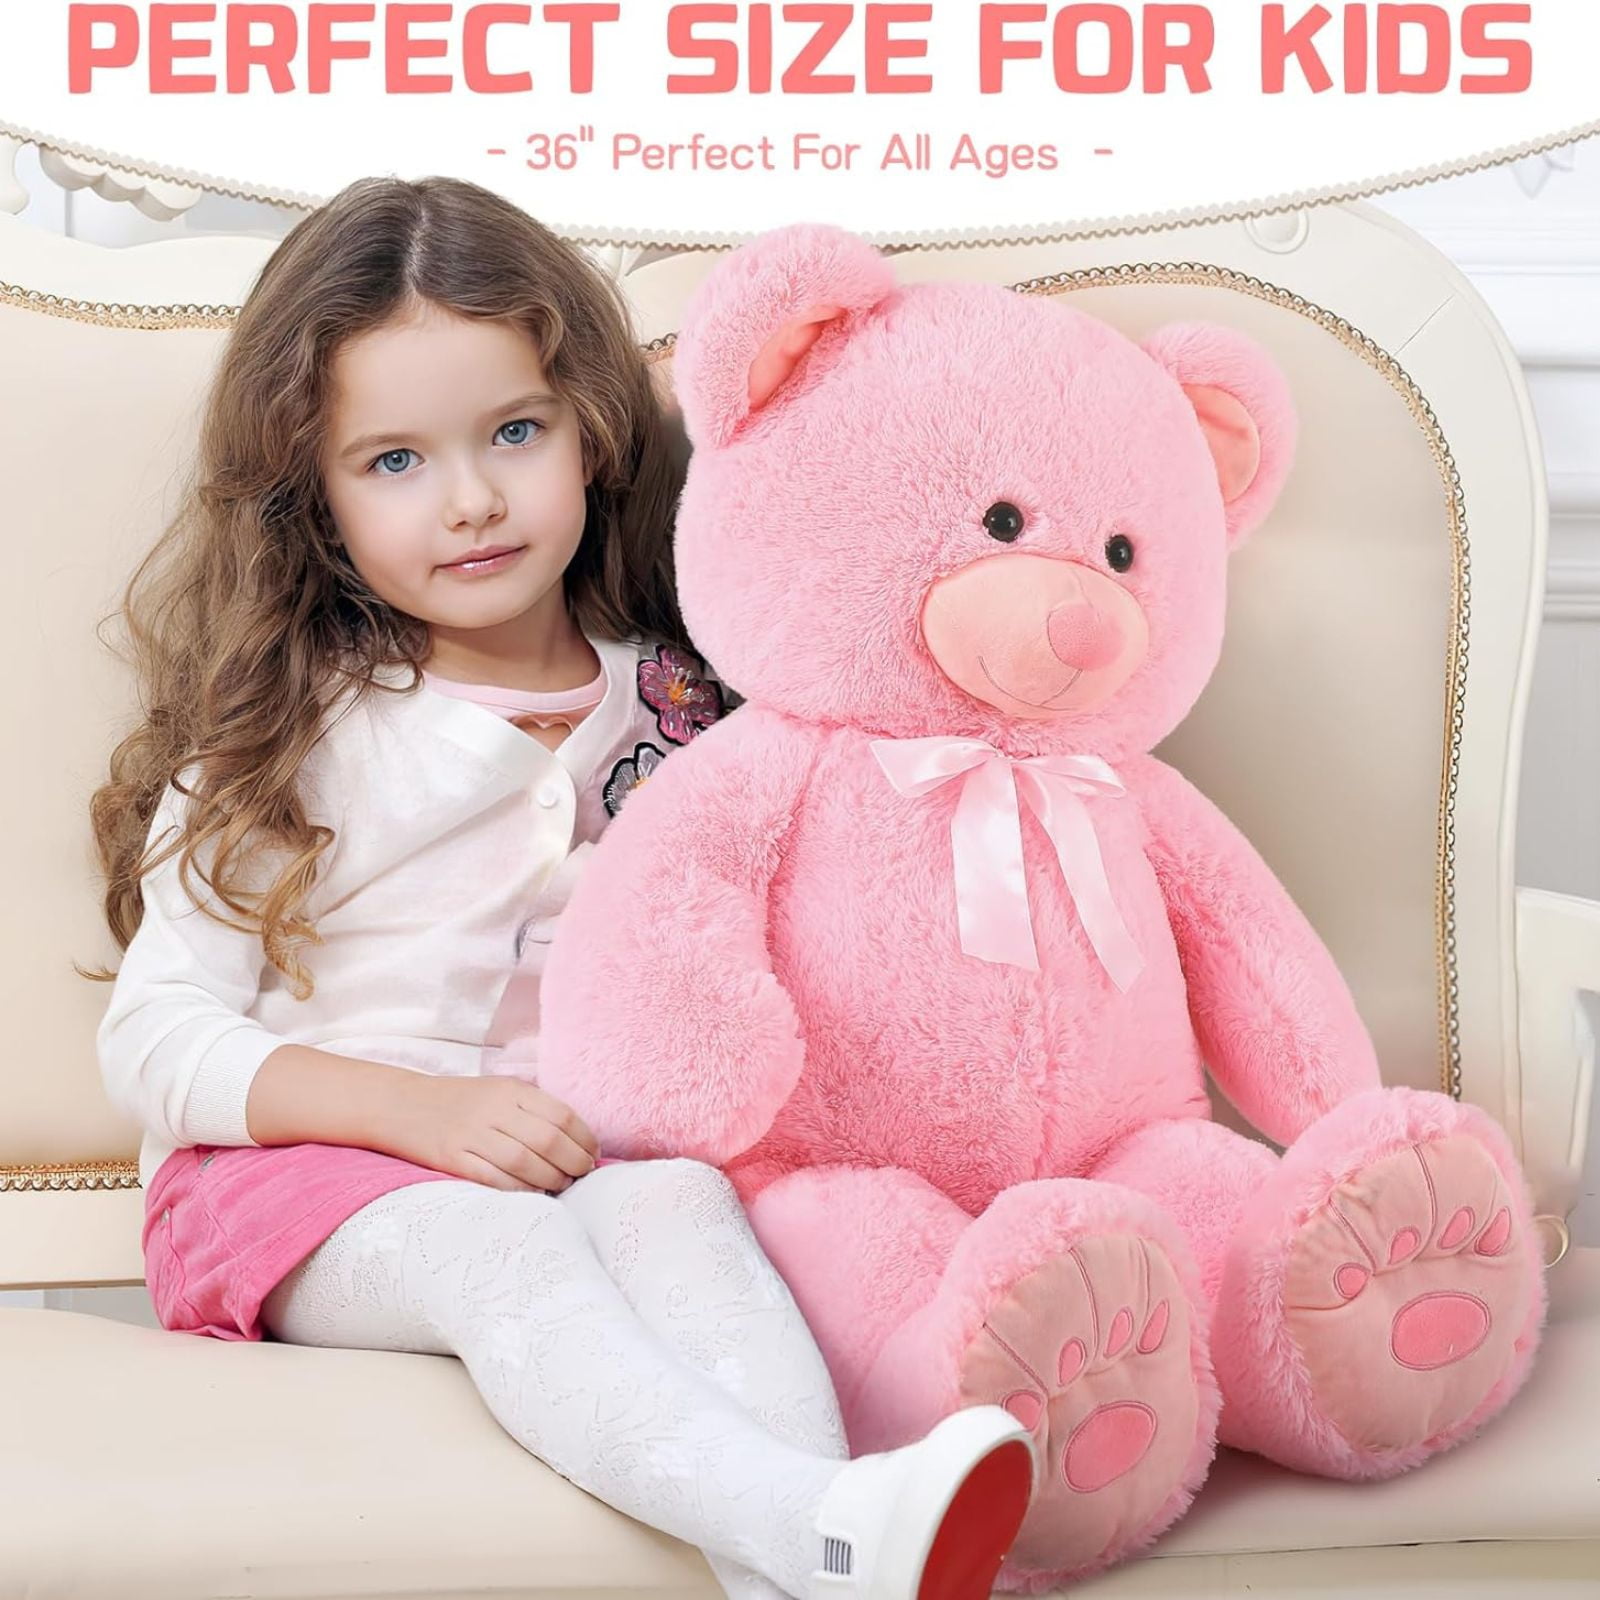 Giant Pink Teddy Bear 36 Inches Soft 3 Foot Teddybear Made in USA - Big  Plush Personalized Giant Teddy Bears Custom Stuffed Animals